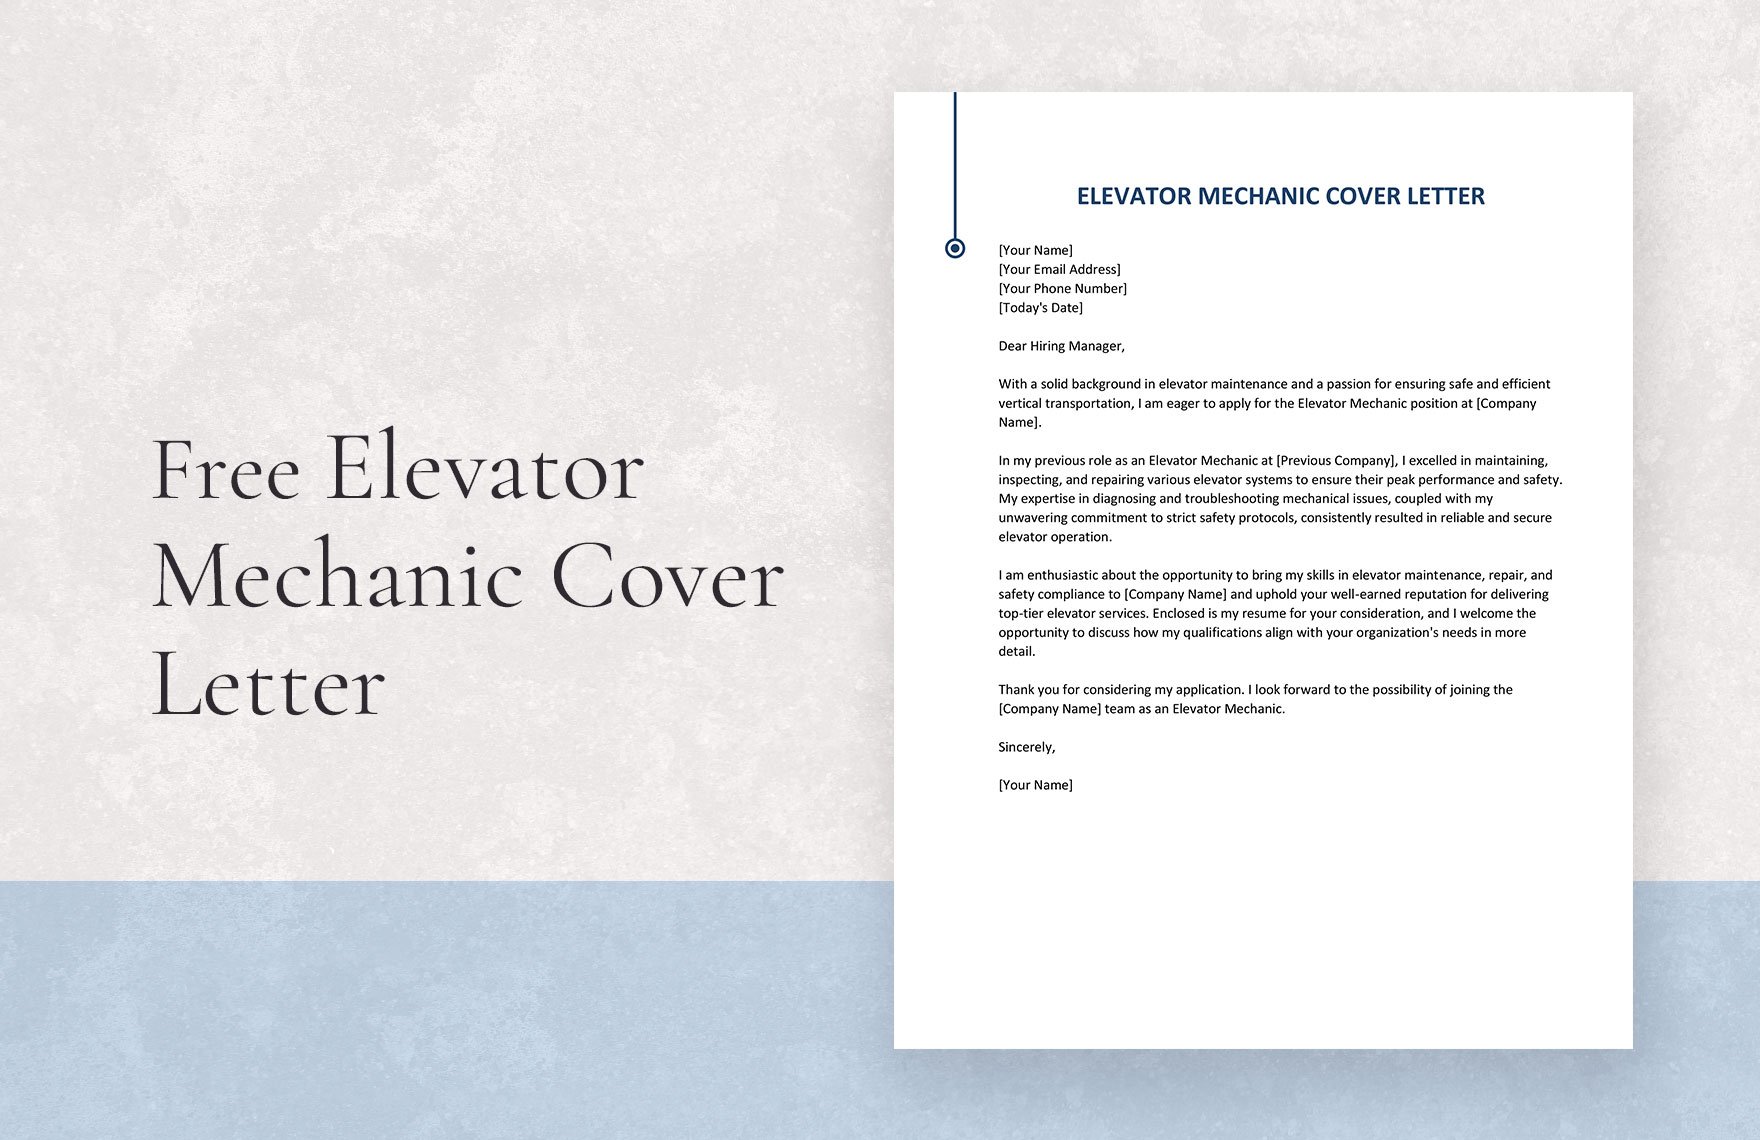 Elevator Mechanic Cover Letter in Word, Google Docs